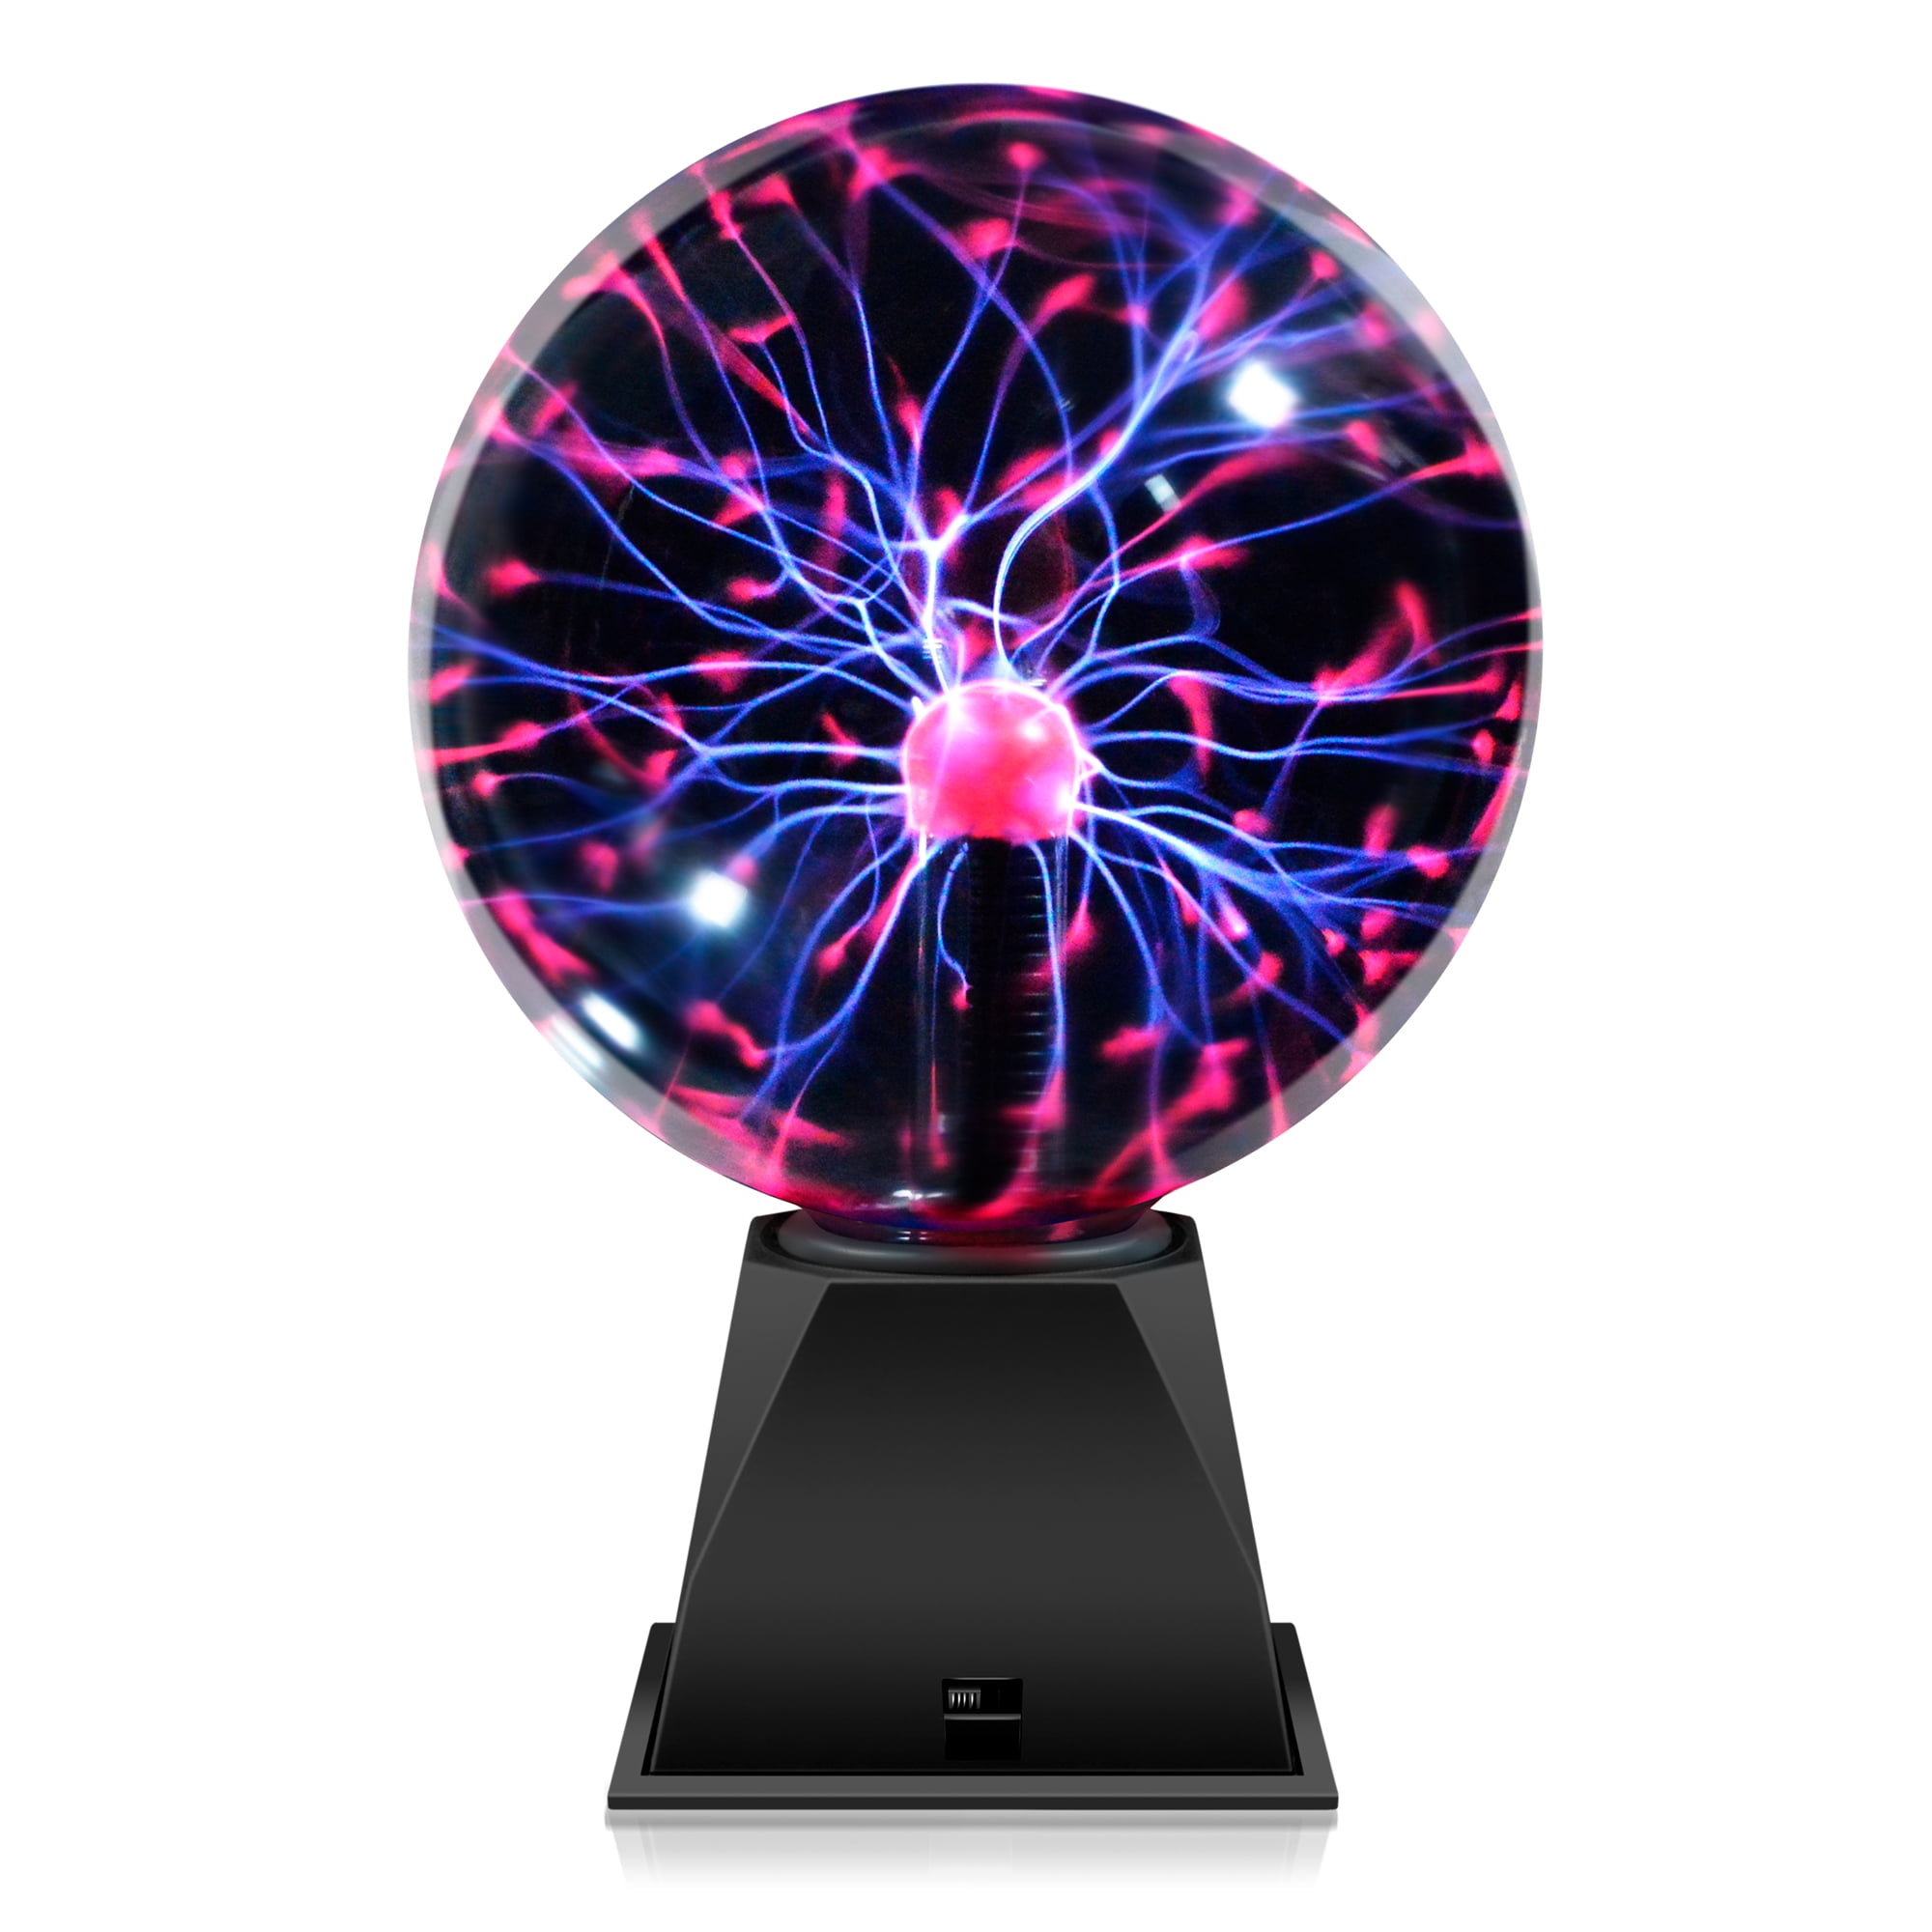 Portable Plasma Ball Orb Light 3" Wireless Battery-Power Desk Decor Science Gift 